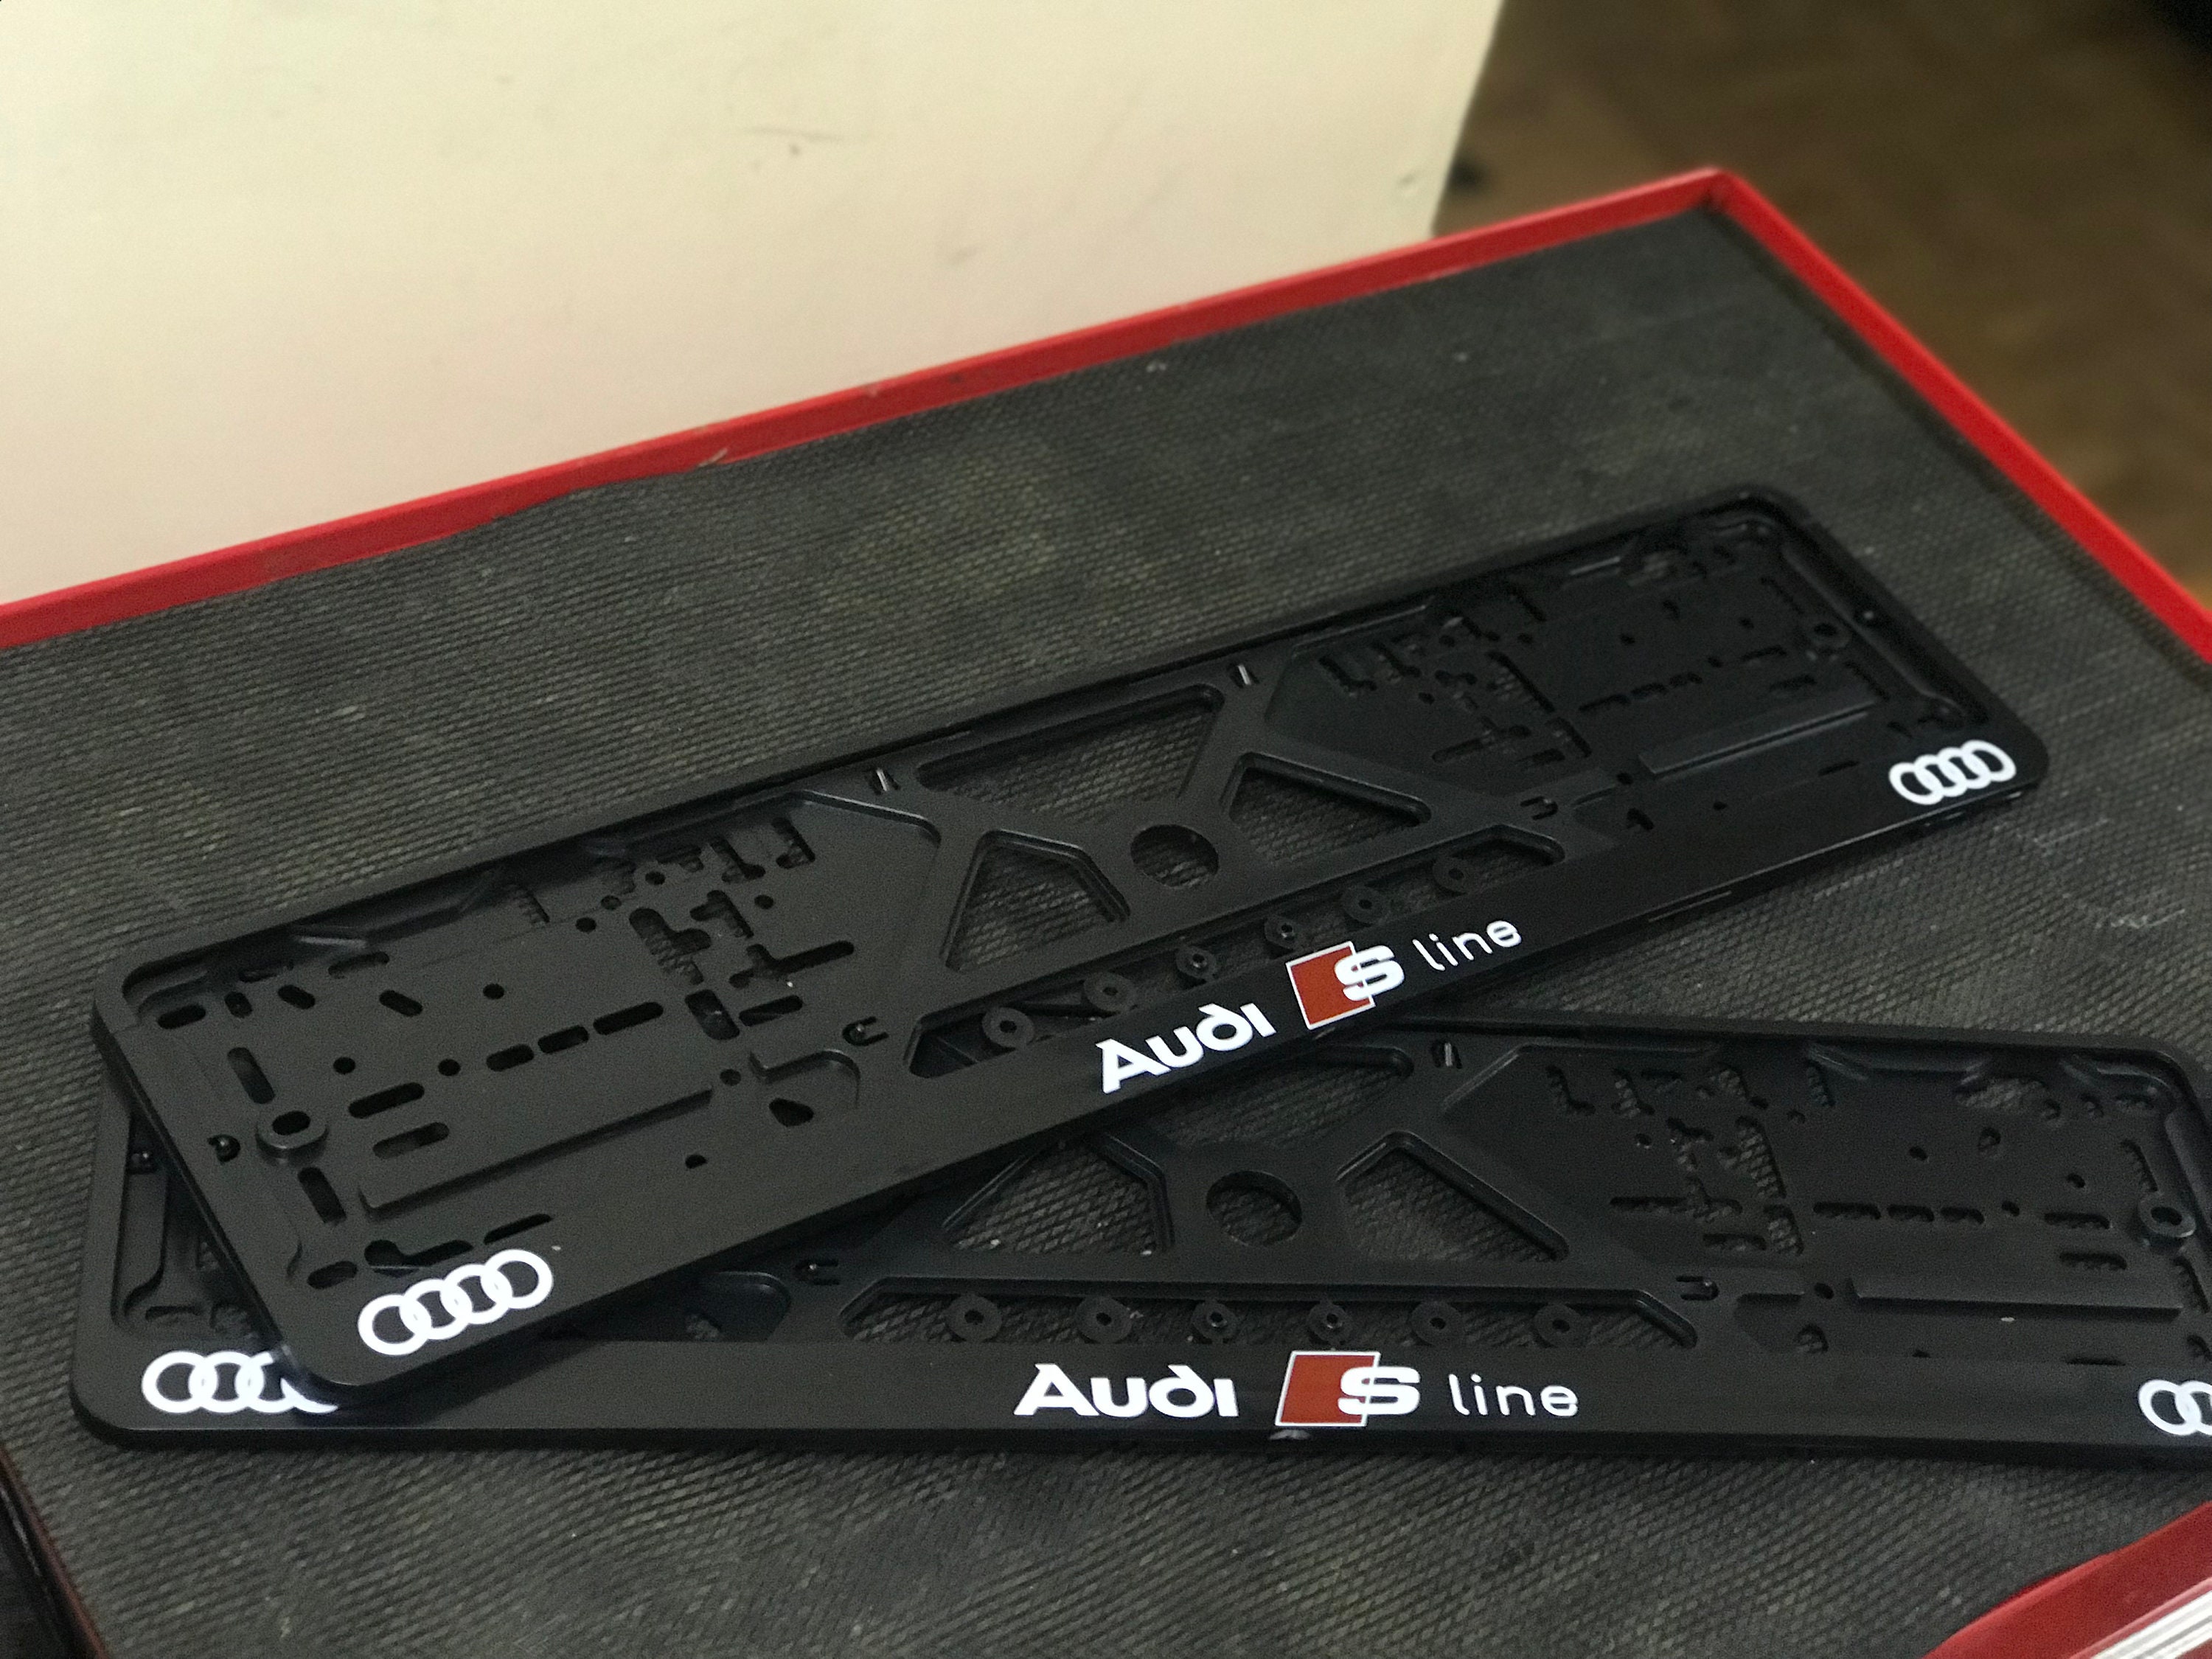 Audi S5 Accessories Etsy UK